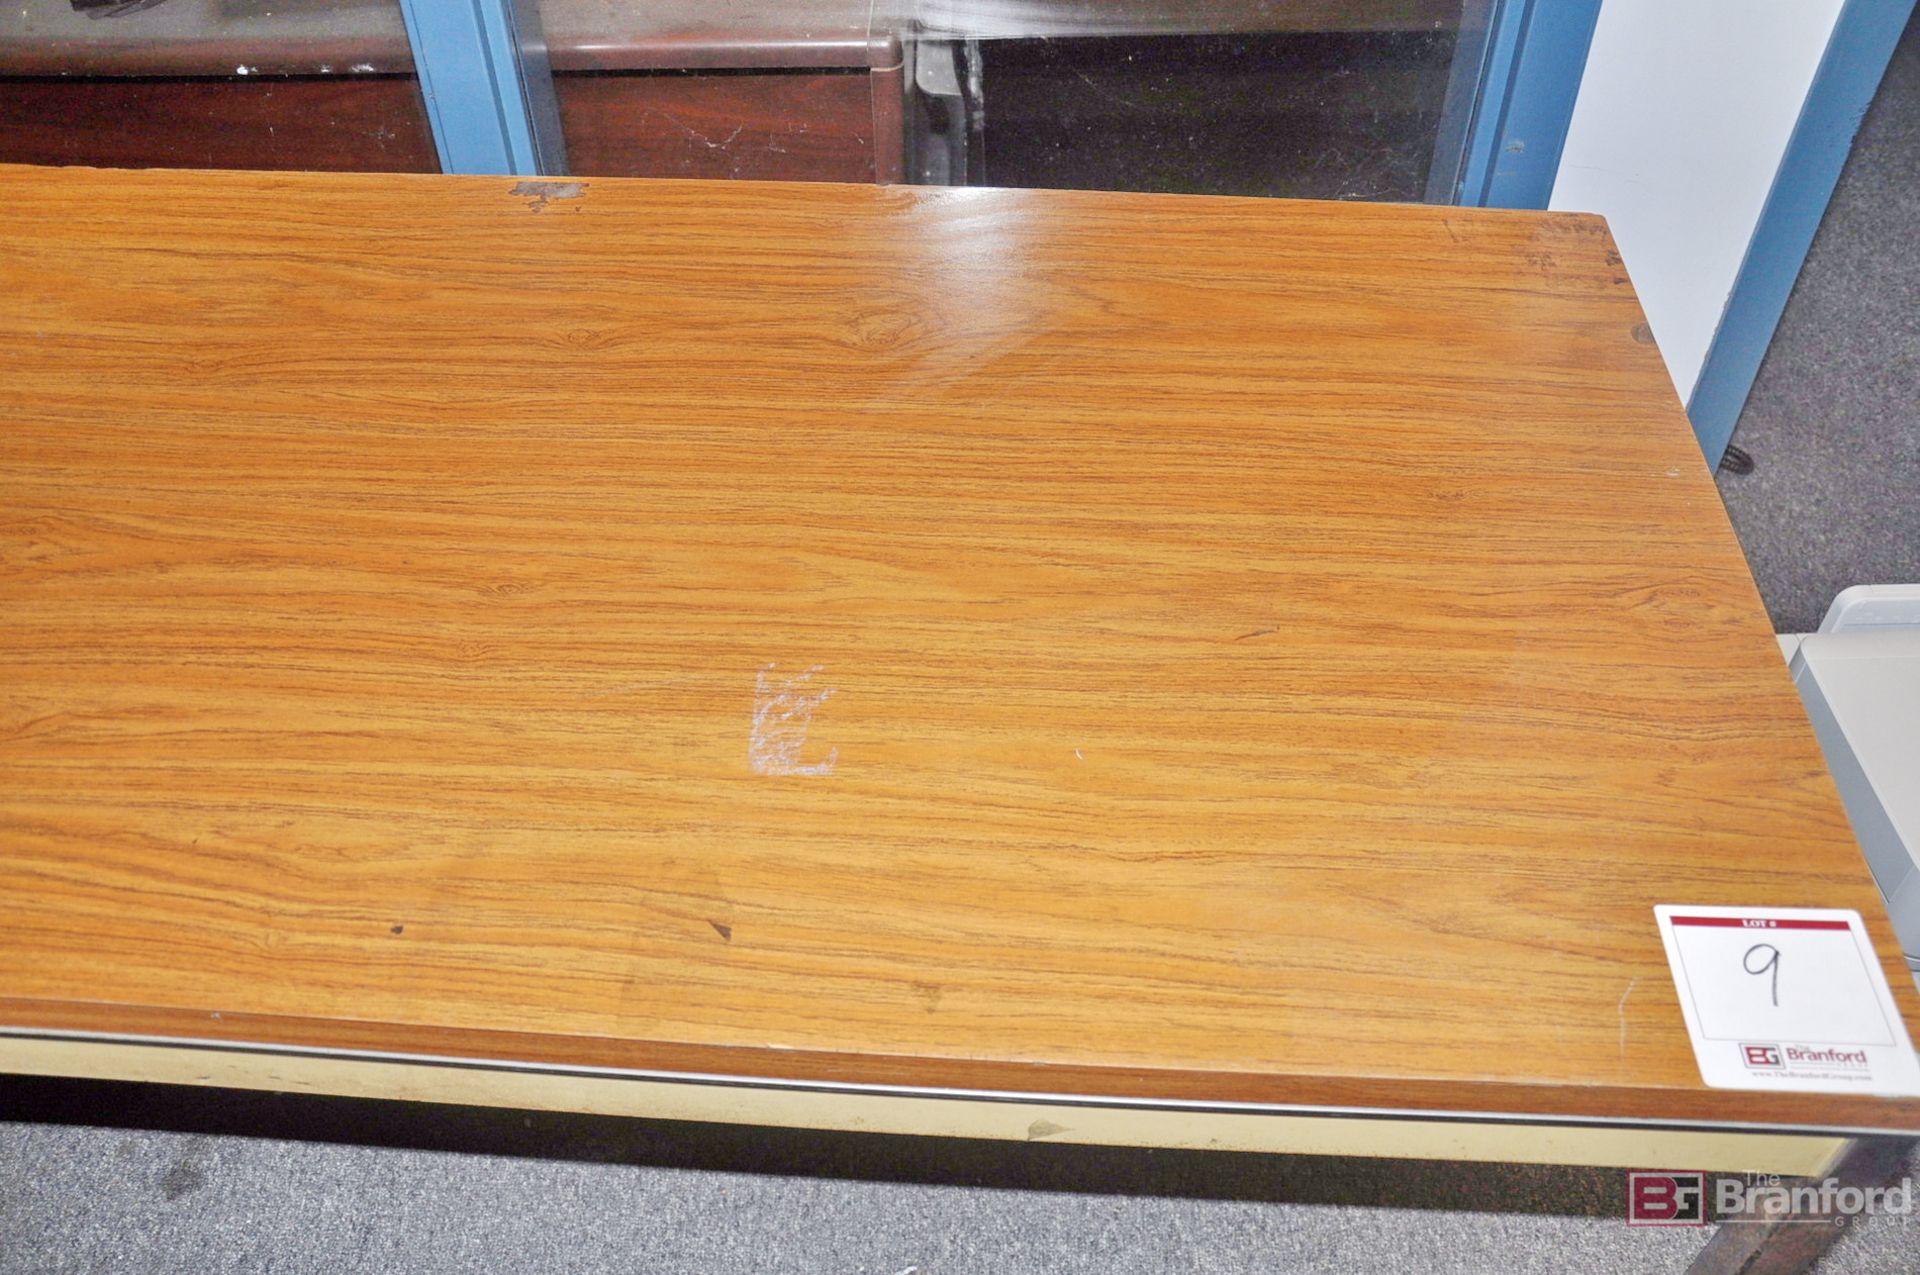 70" X 30" X 30" wood grain table - Image 4 of 5